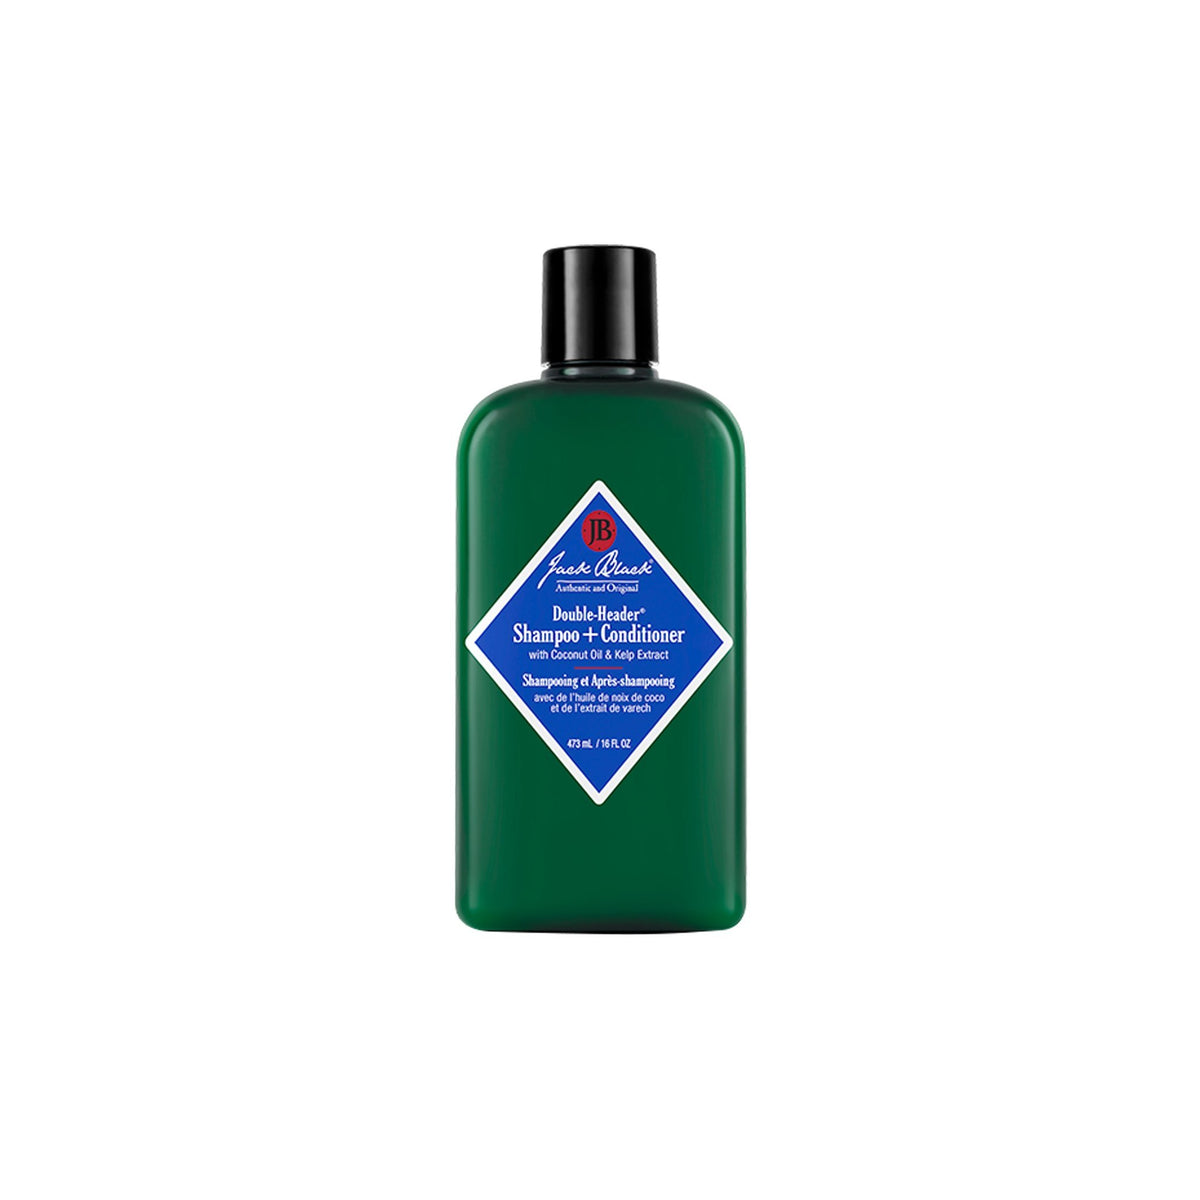 Jack Black Double-Header Shampoo + Conditioner 473ml